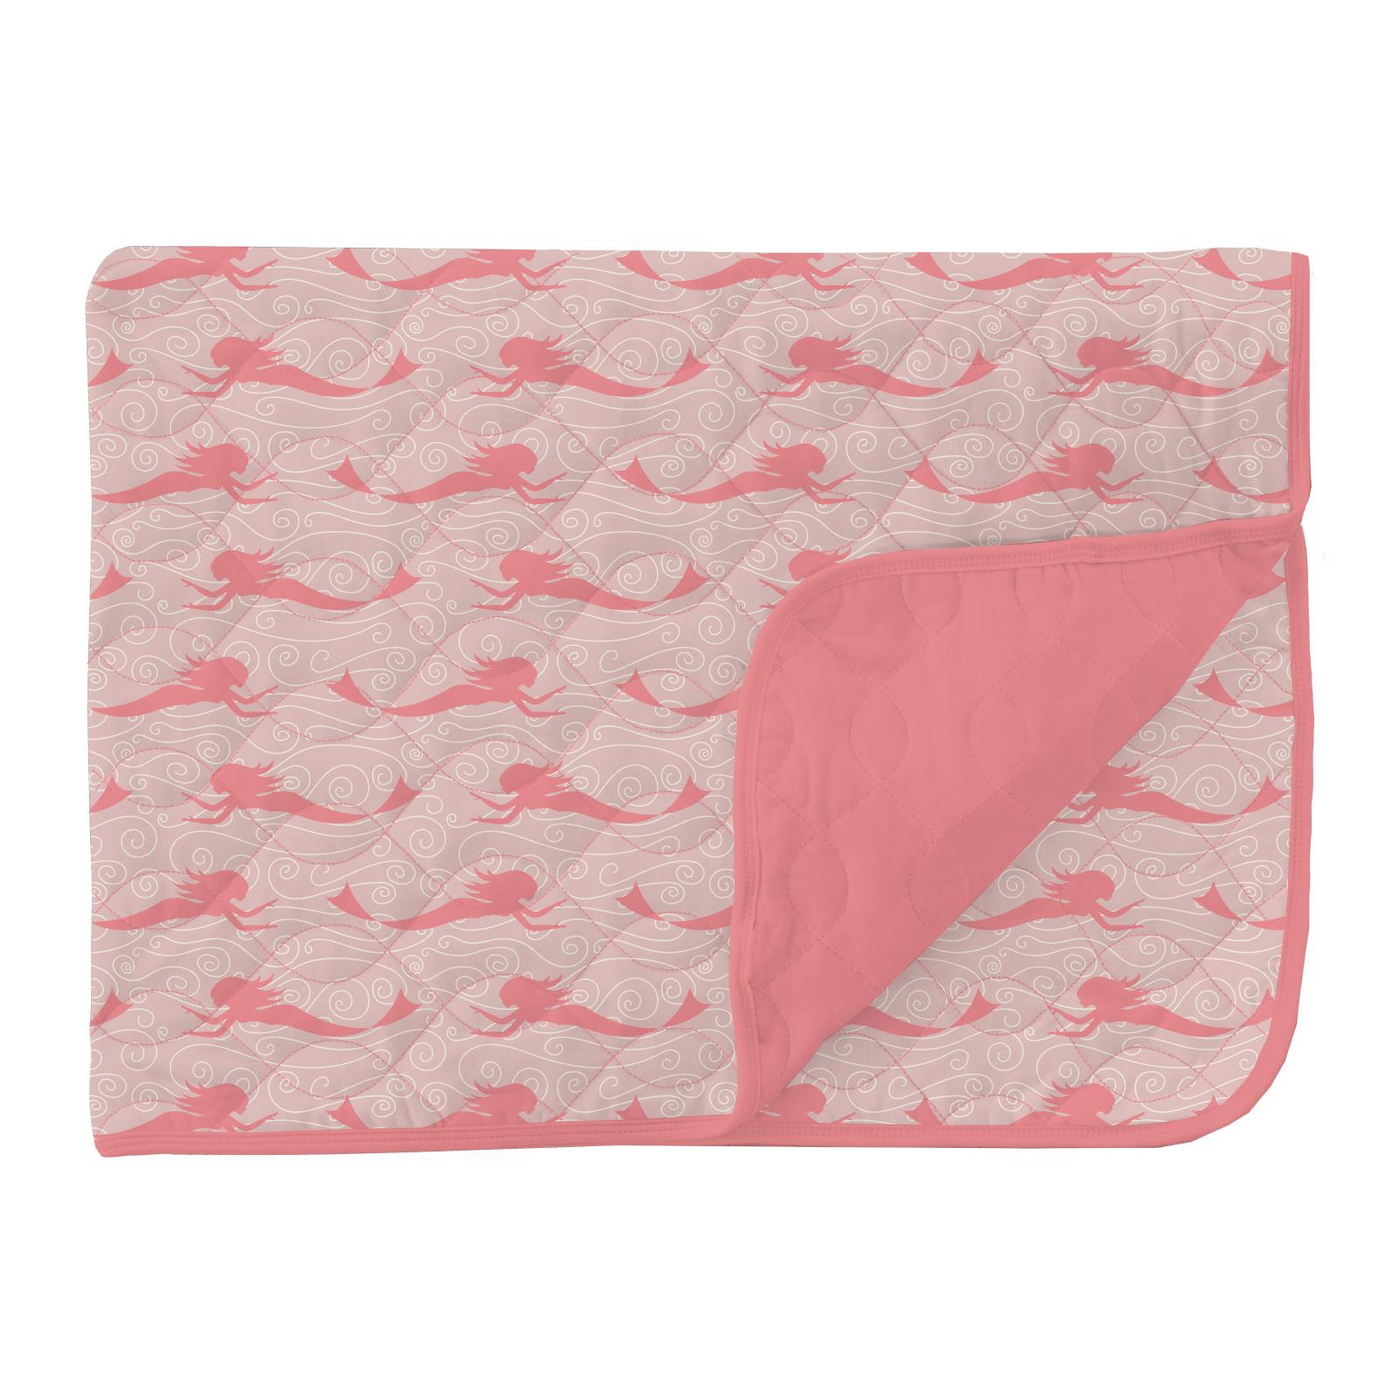 Kickee Pants Quilted Throw Blanket: Baby Rose Mermaids/Strawberry